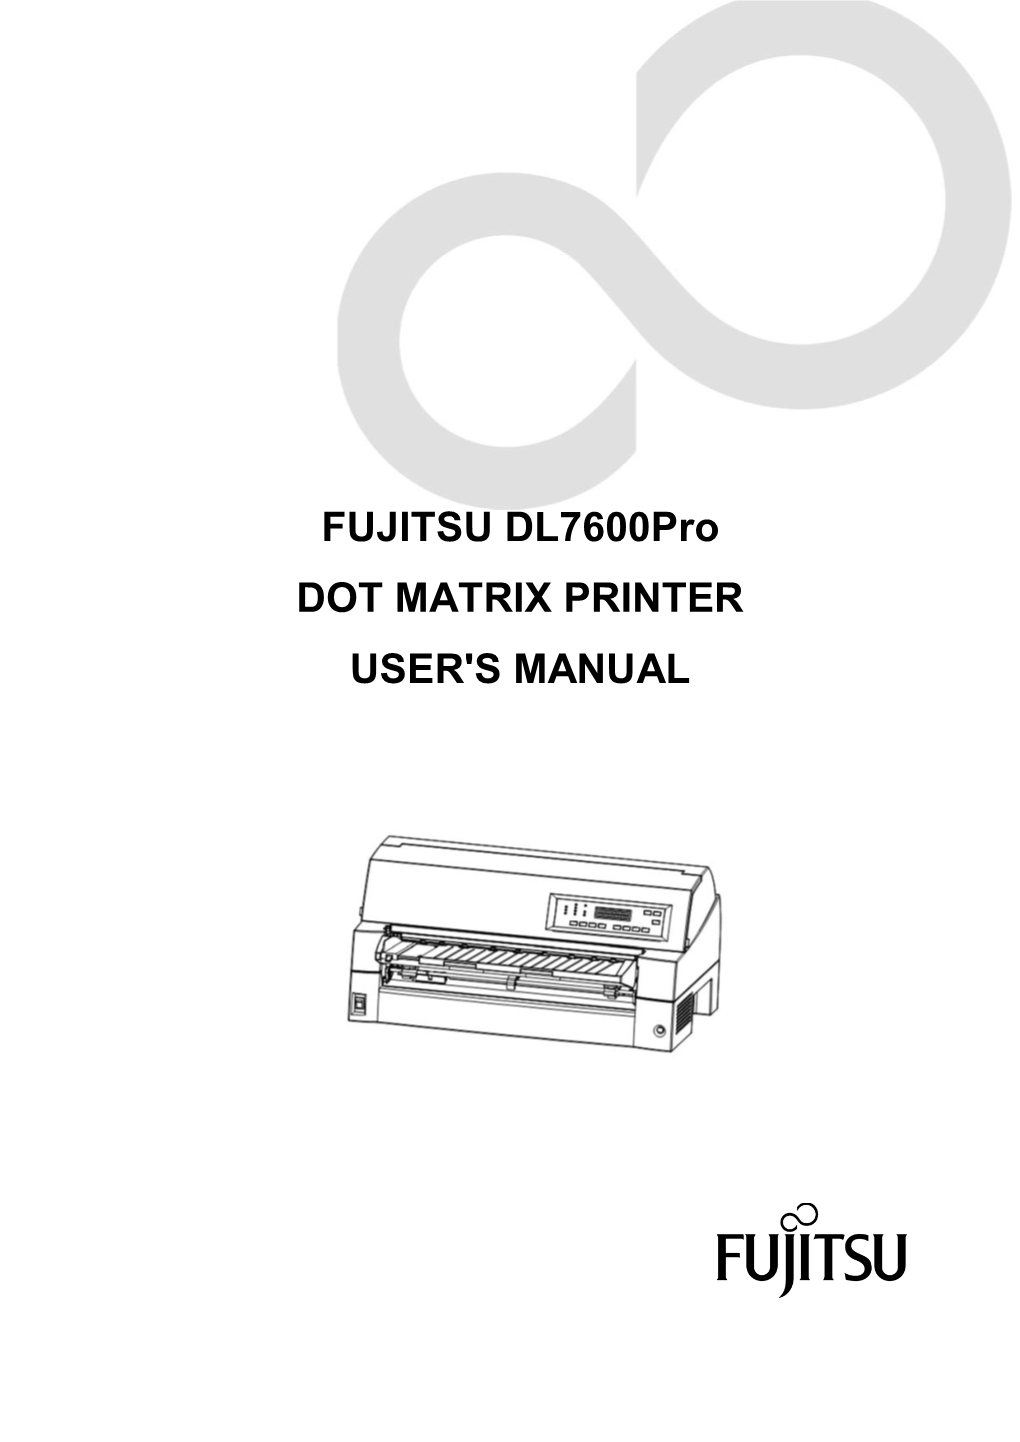 FUJITSU Dl7600pro DOT MATRIX PRINTER USER's MANUAL